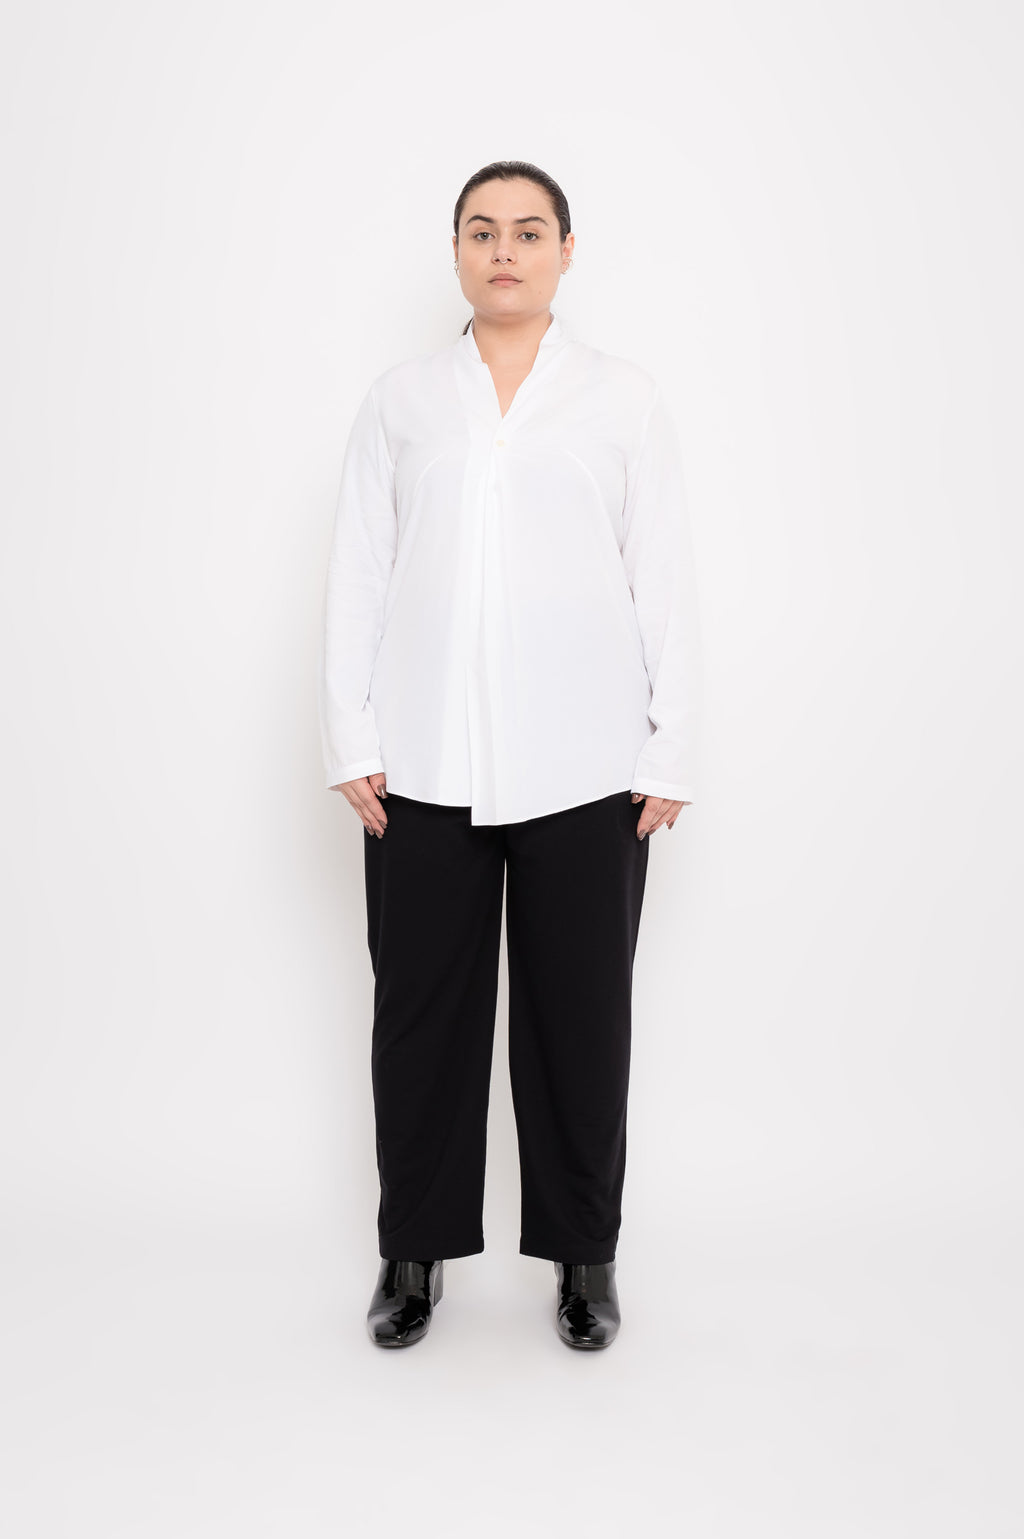 Long Sleeve Wide Shirt | Rucula